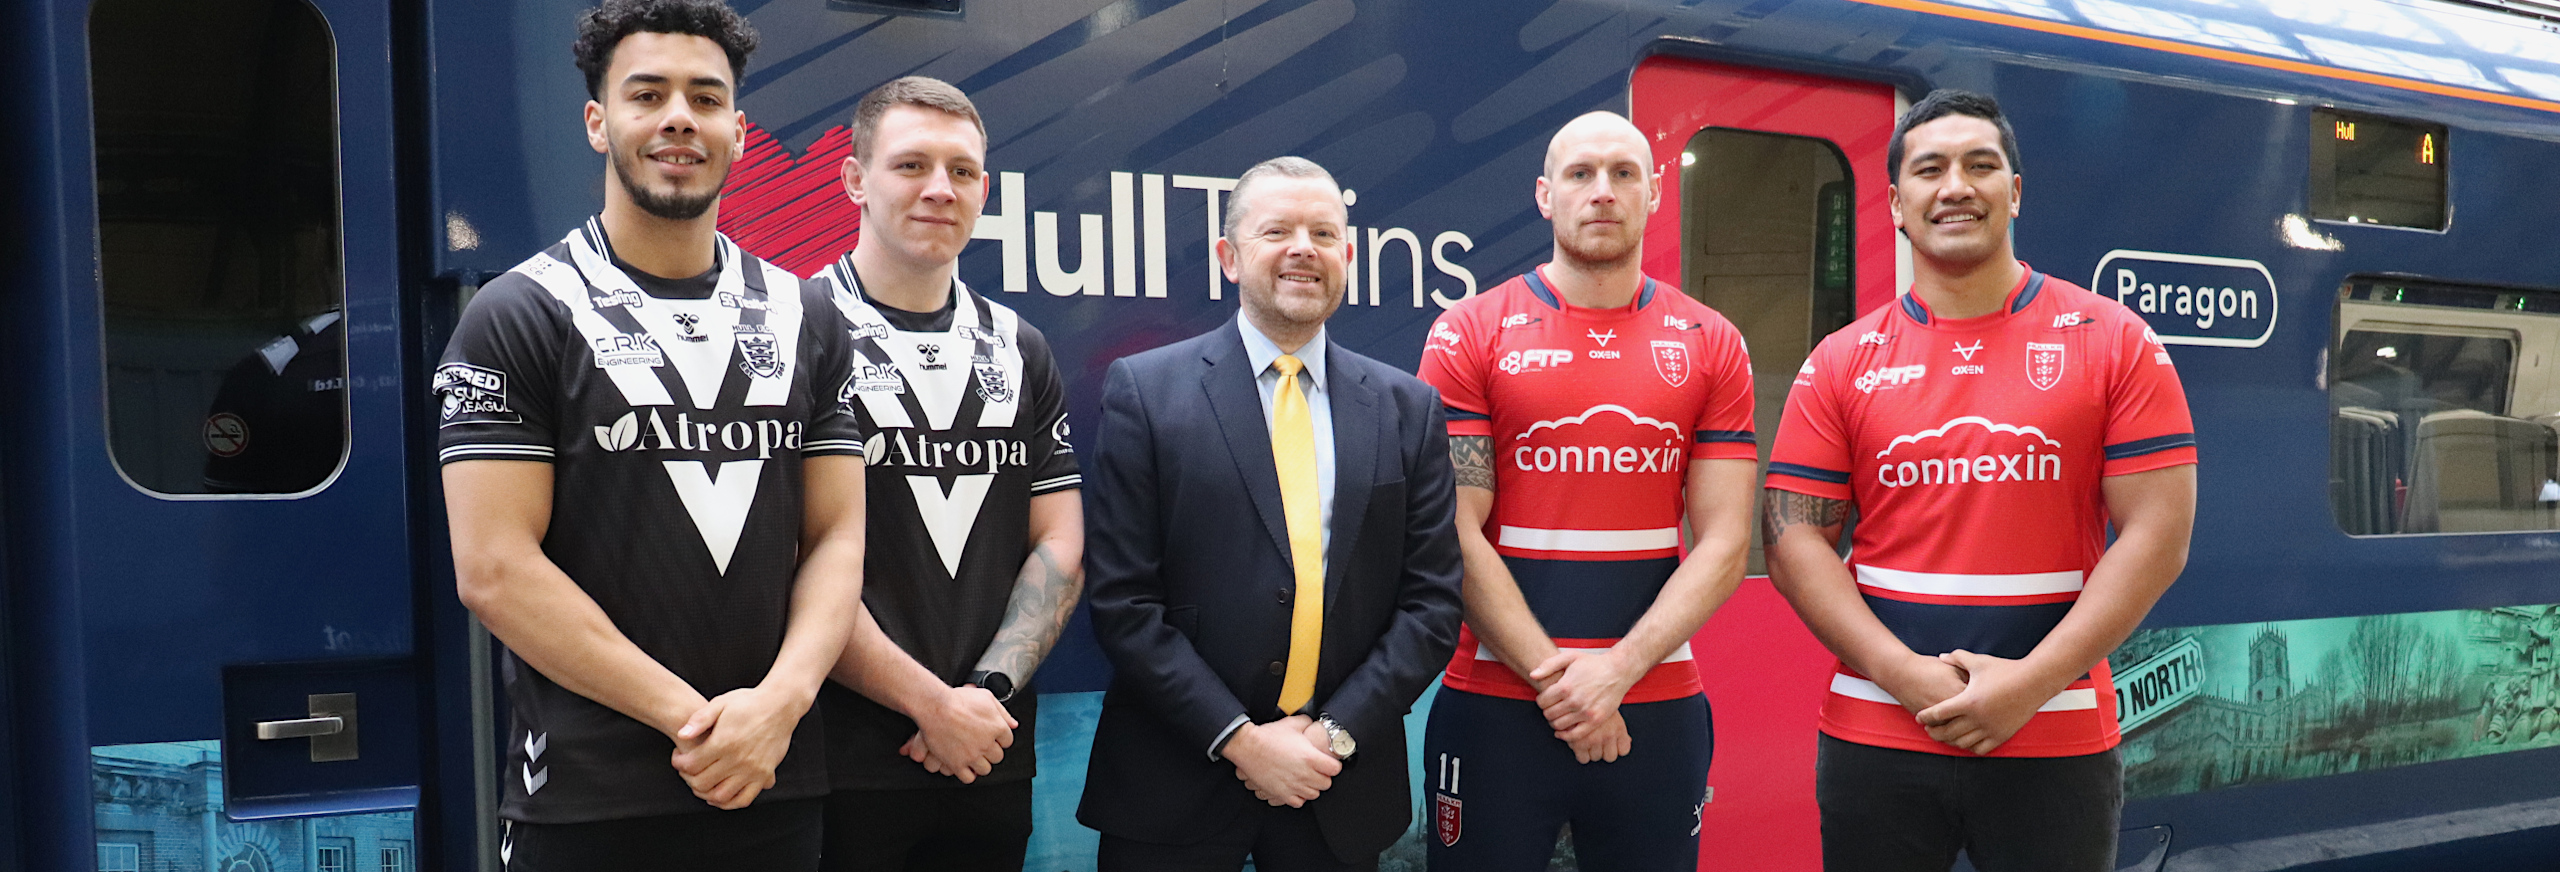 Hull Trains sponsor Hull FC and KR rugby teams